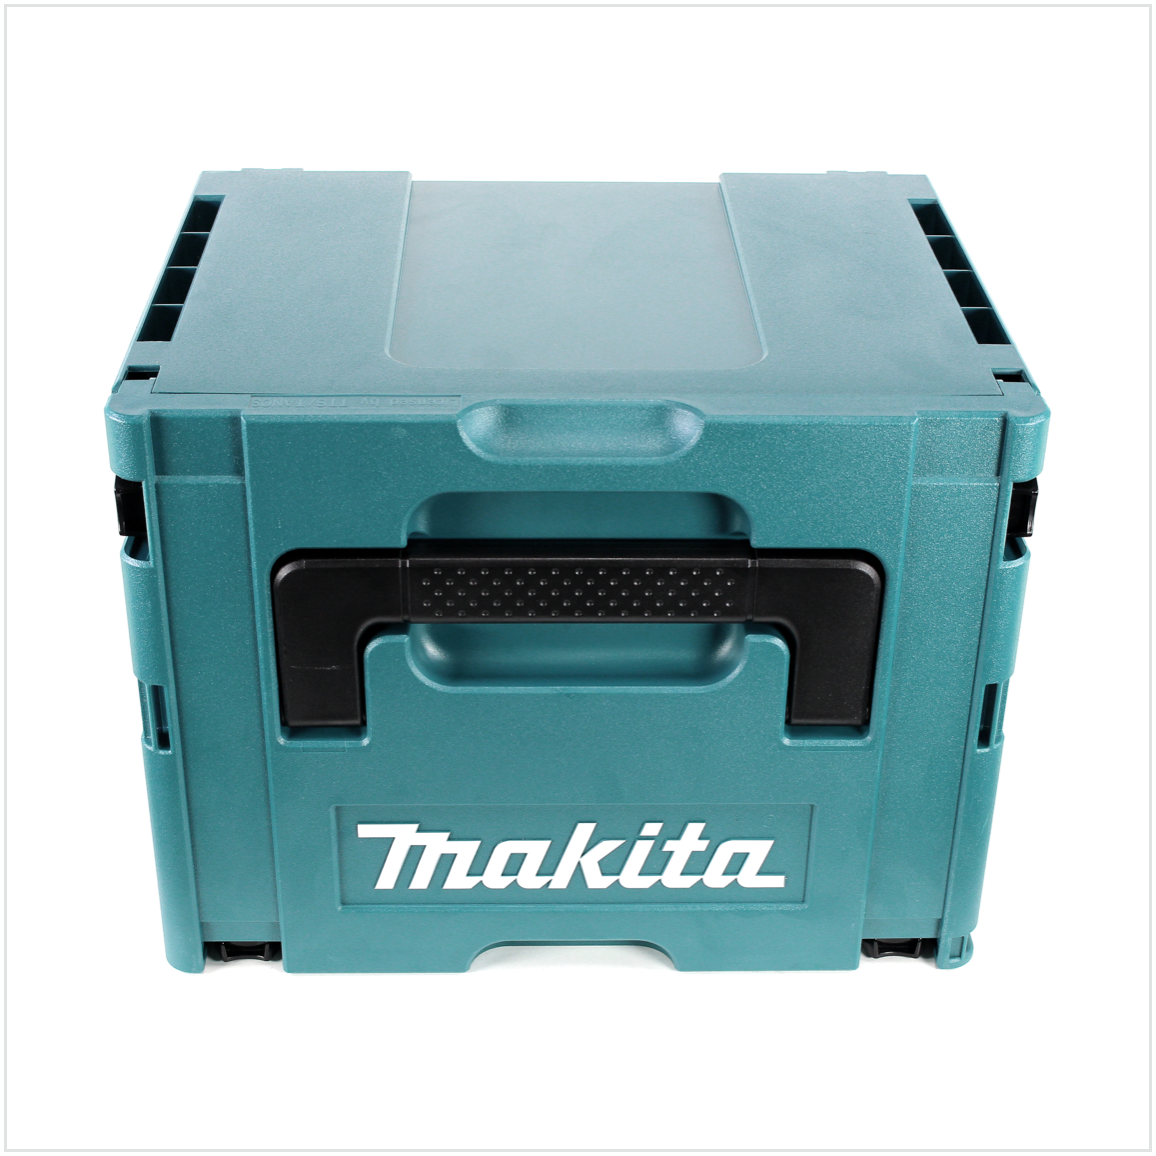 Makita DSS 611 RMJ 18V Li-ion Scie Circulaire sans fil 165mm + Coffret Makpac + 2x Batteries BL1840 4,0 Ah + Chargeur DC 18 RC 4